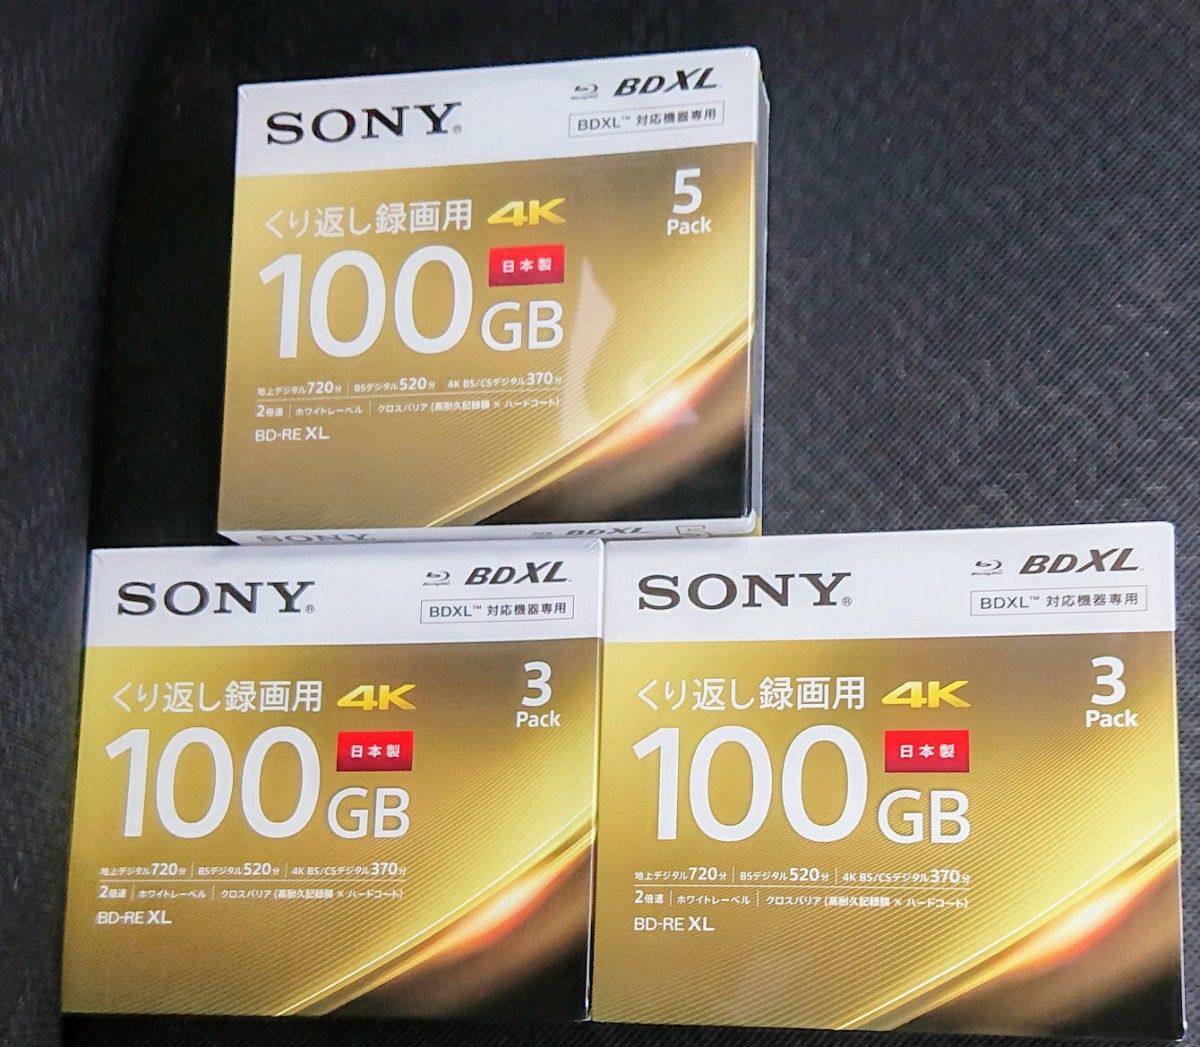 SONY くり返し録画用BD-RE XL 100GB 11枚 (5P+3P+3P)